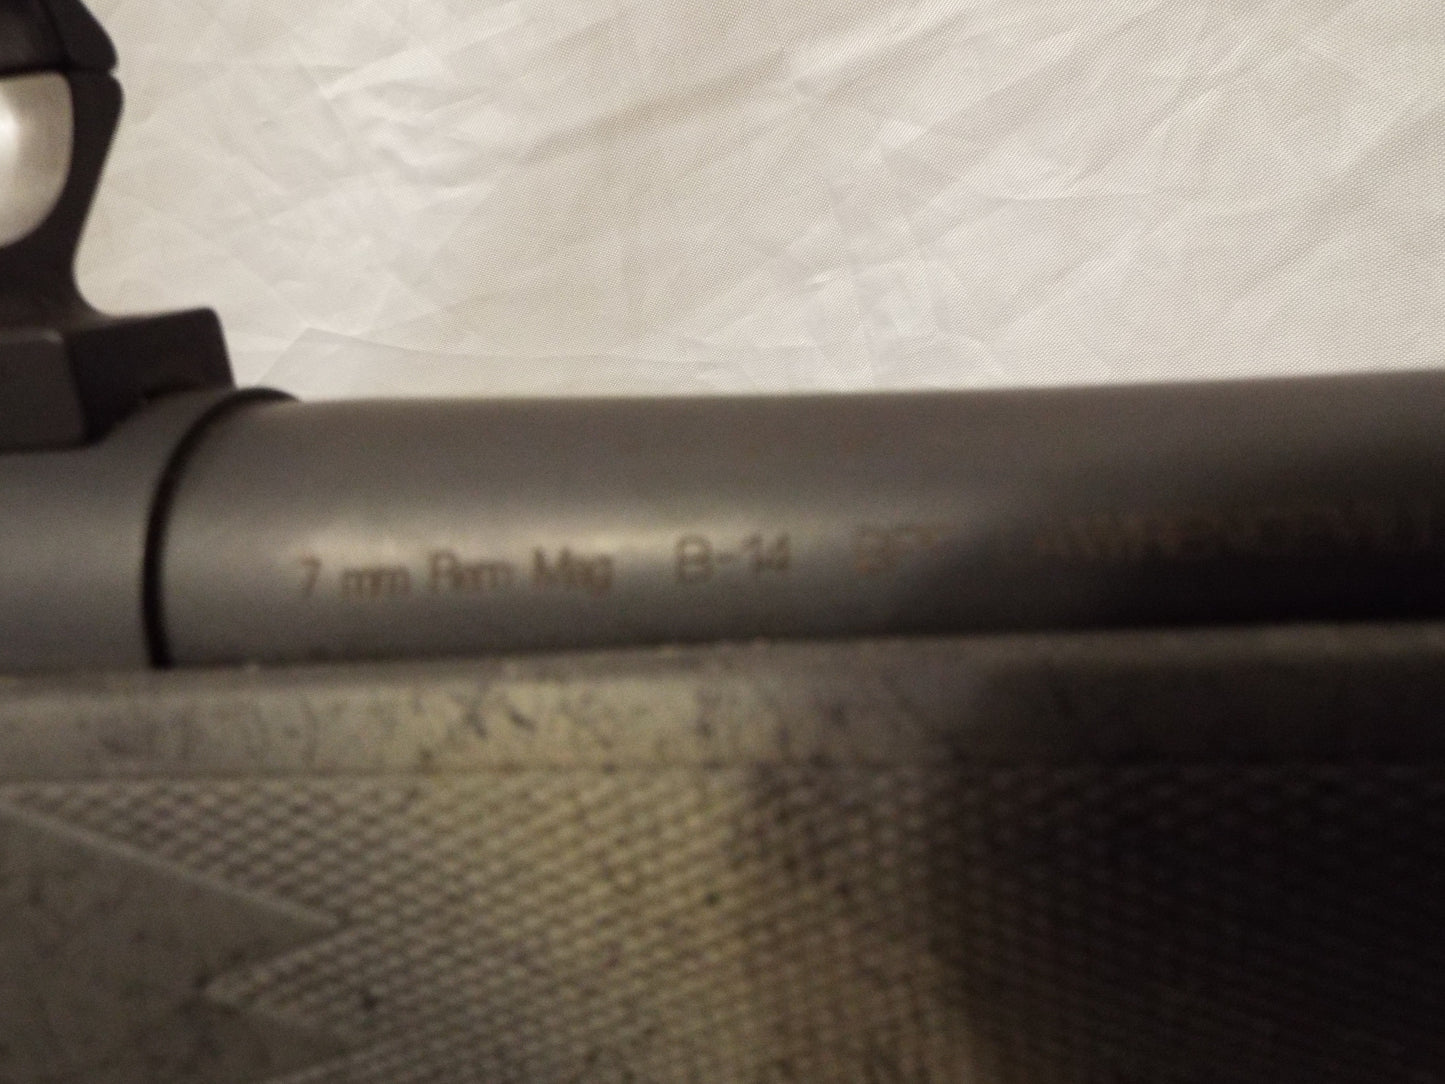 Bergara, B-14 Wilderness Series, Ridge, Bolt Action Rifle, 7mm Remington Magnum, 24" Barrel